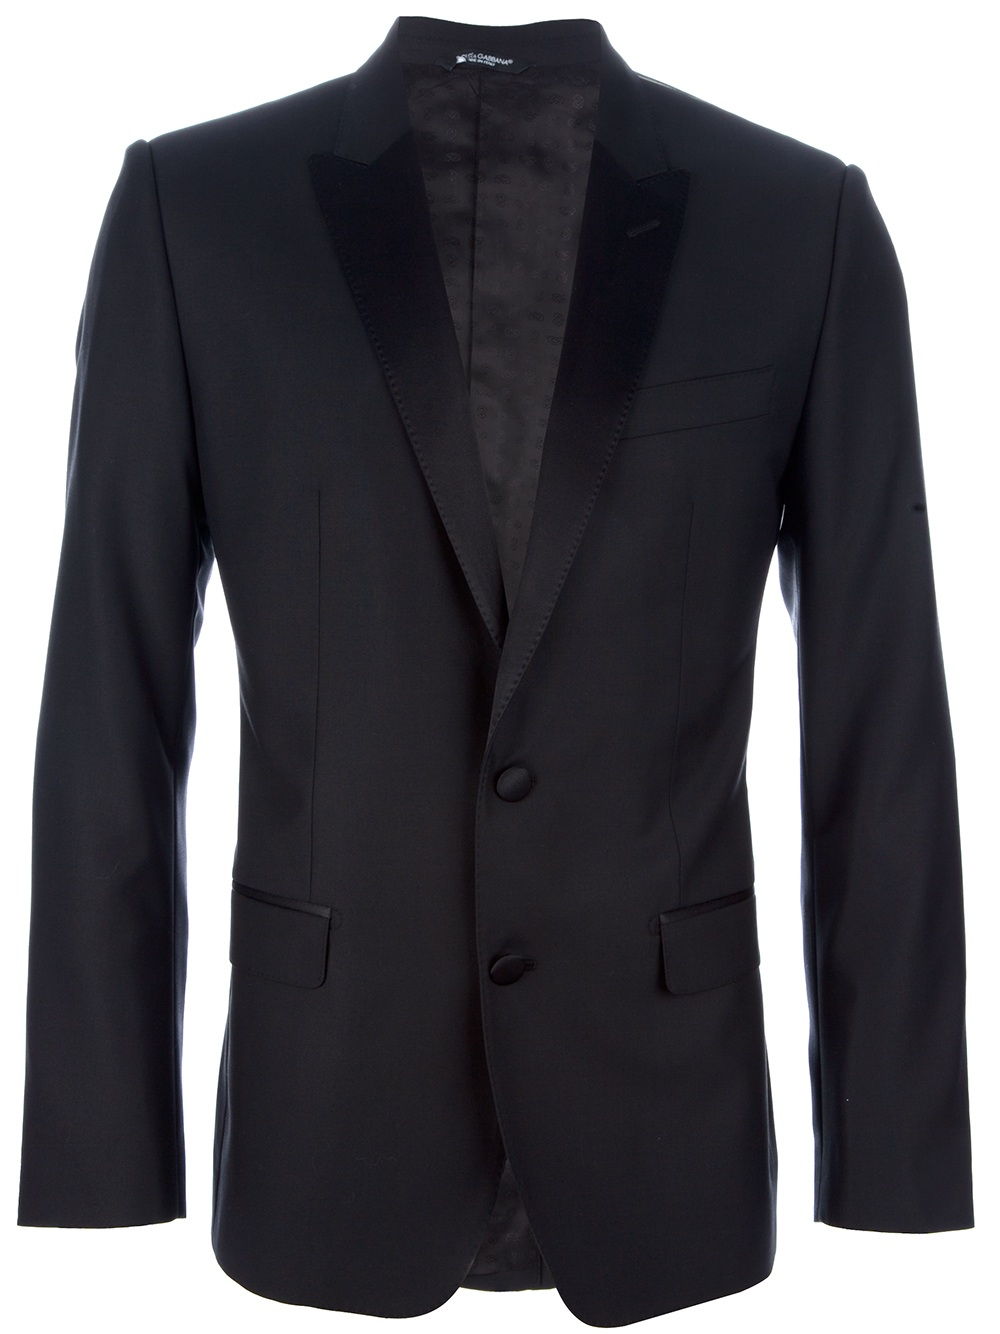 Lyst - Dolce & gabbana Tuxedo Suit in Black for Men